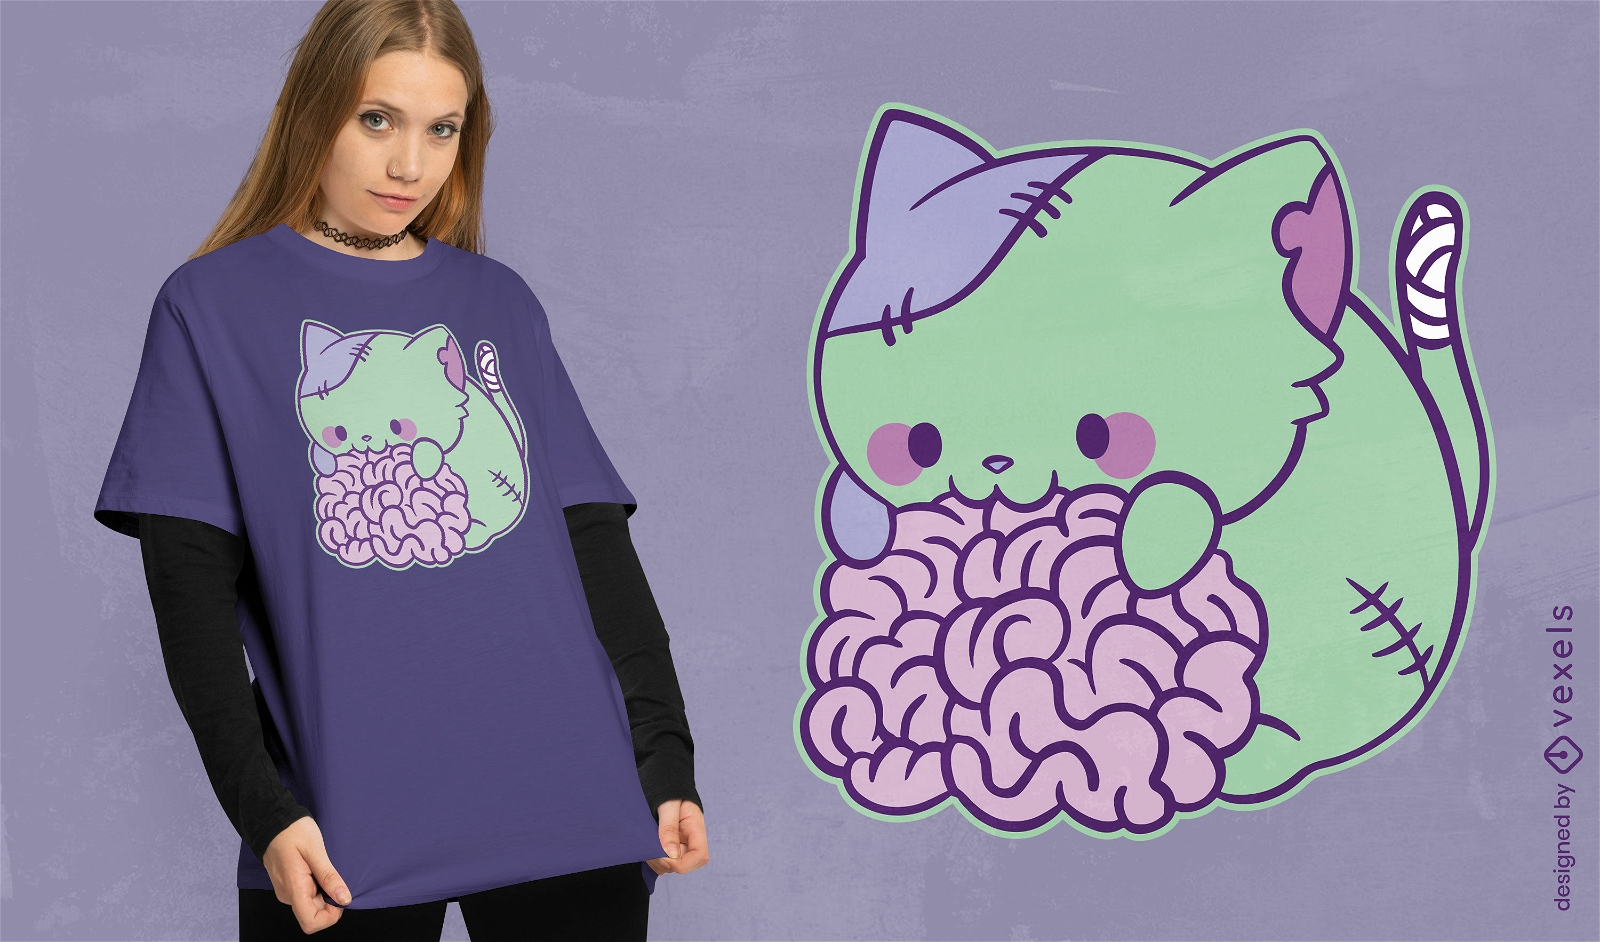 Zombie cat eating brain t-shirt design